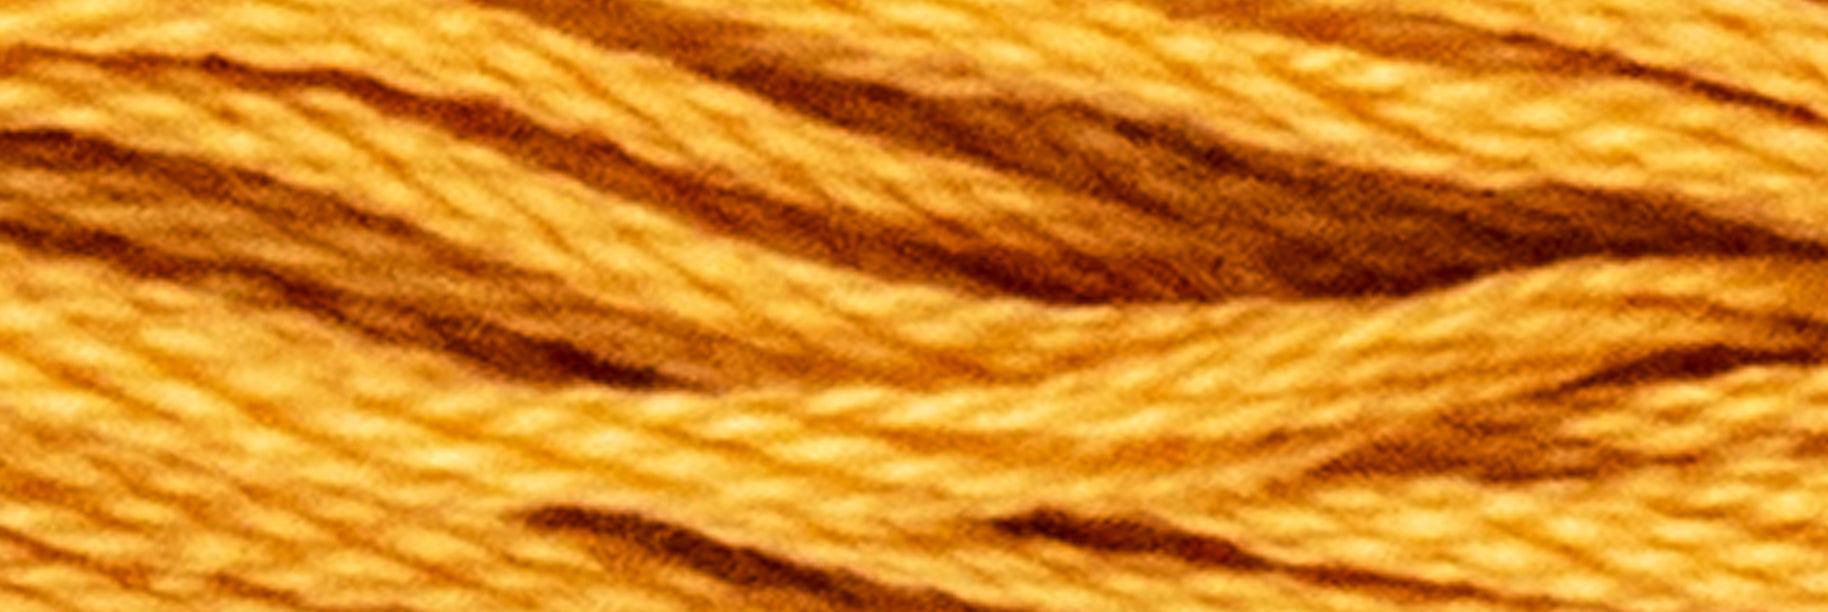 Stranded Cotton Luca-S - 357 / DMC 977 / Anchor 1002 Stranded Cotton - HobbyJobby